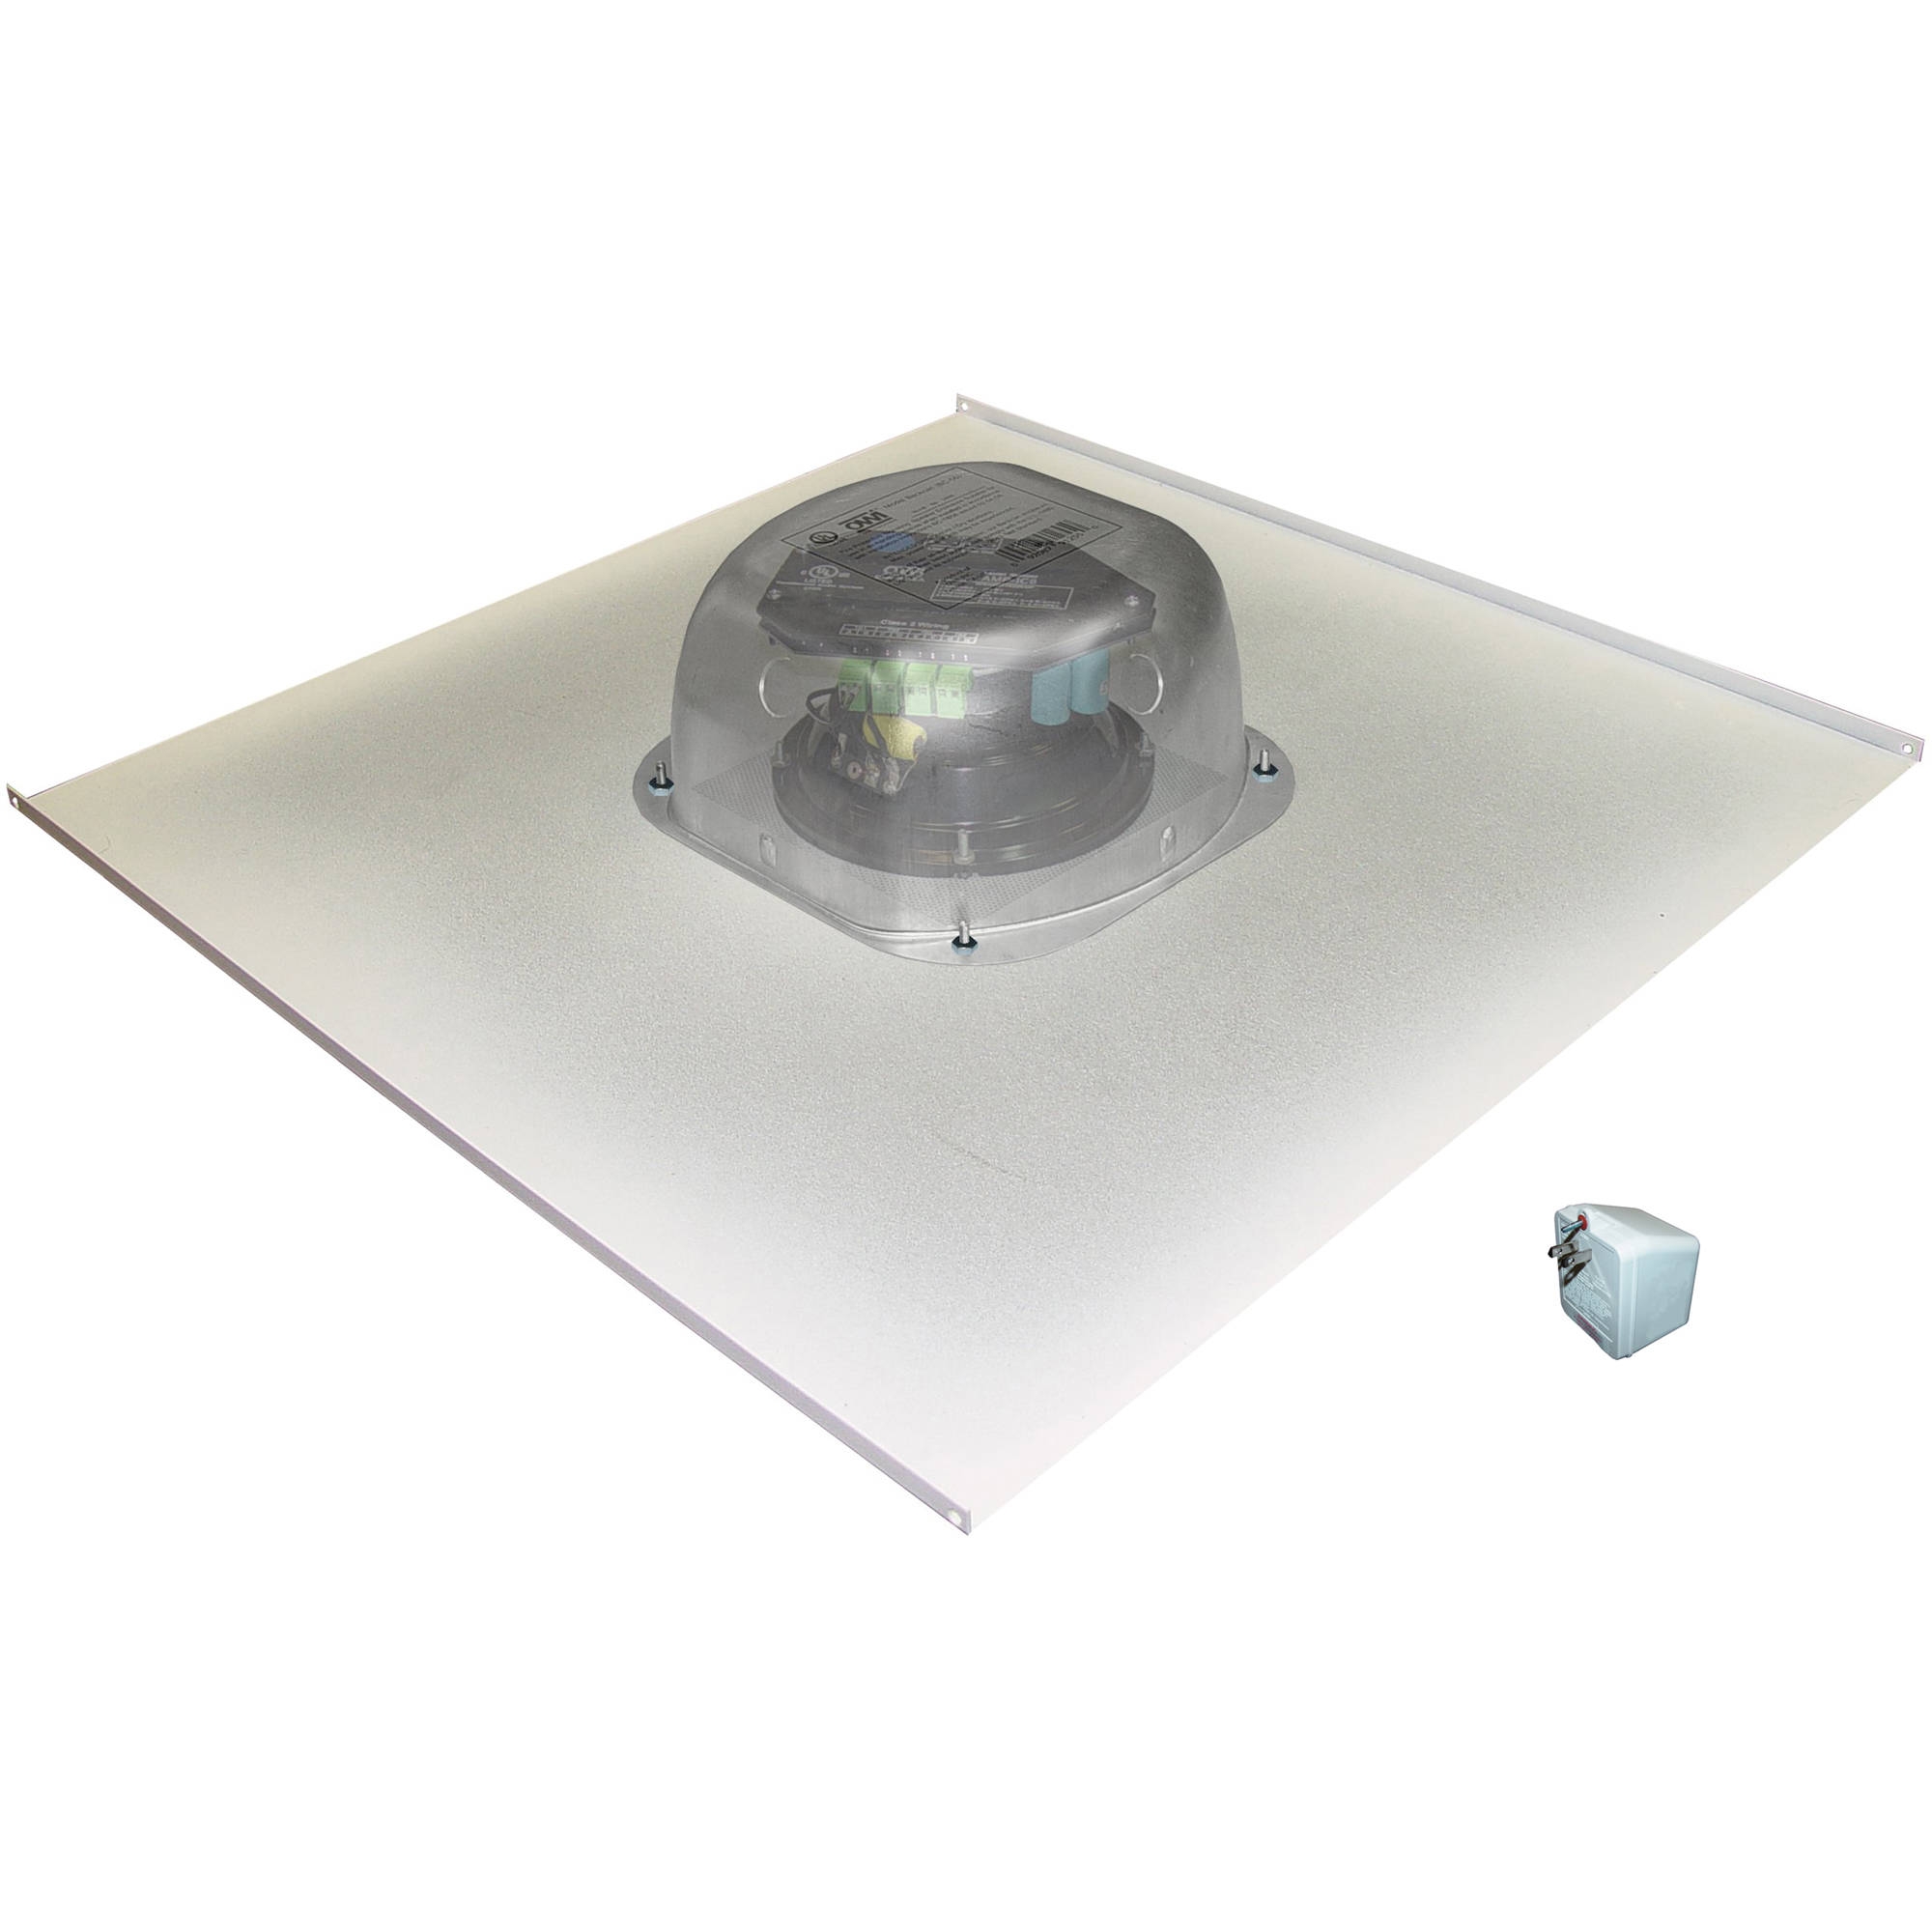 Drop Tile Ceiling Speakers Drop Tile Ceiling Speakers owi inc amplified drop ceiling speaker on a 2x2 2x2amp1s61 bh 2000 X 2000